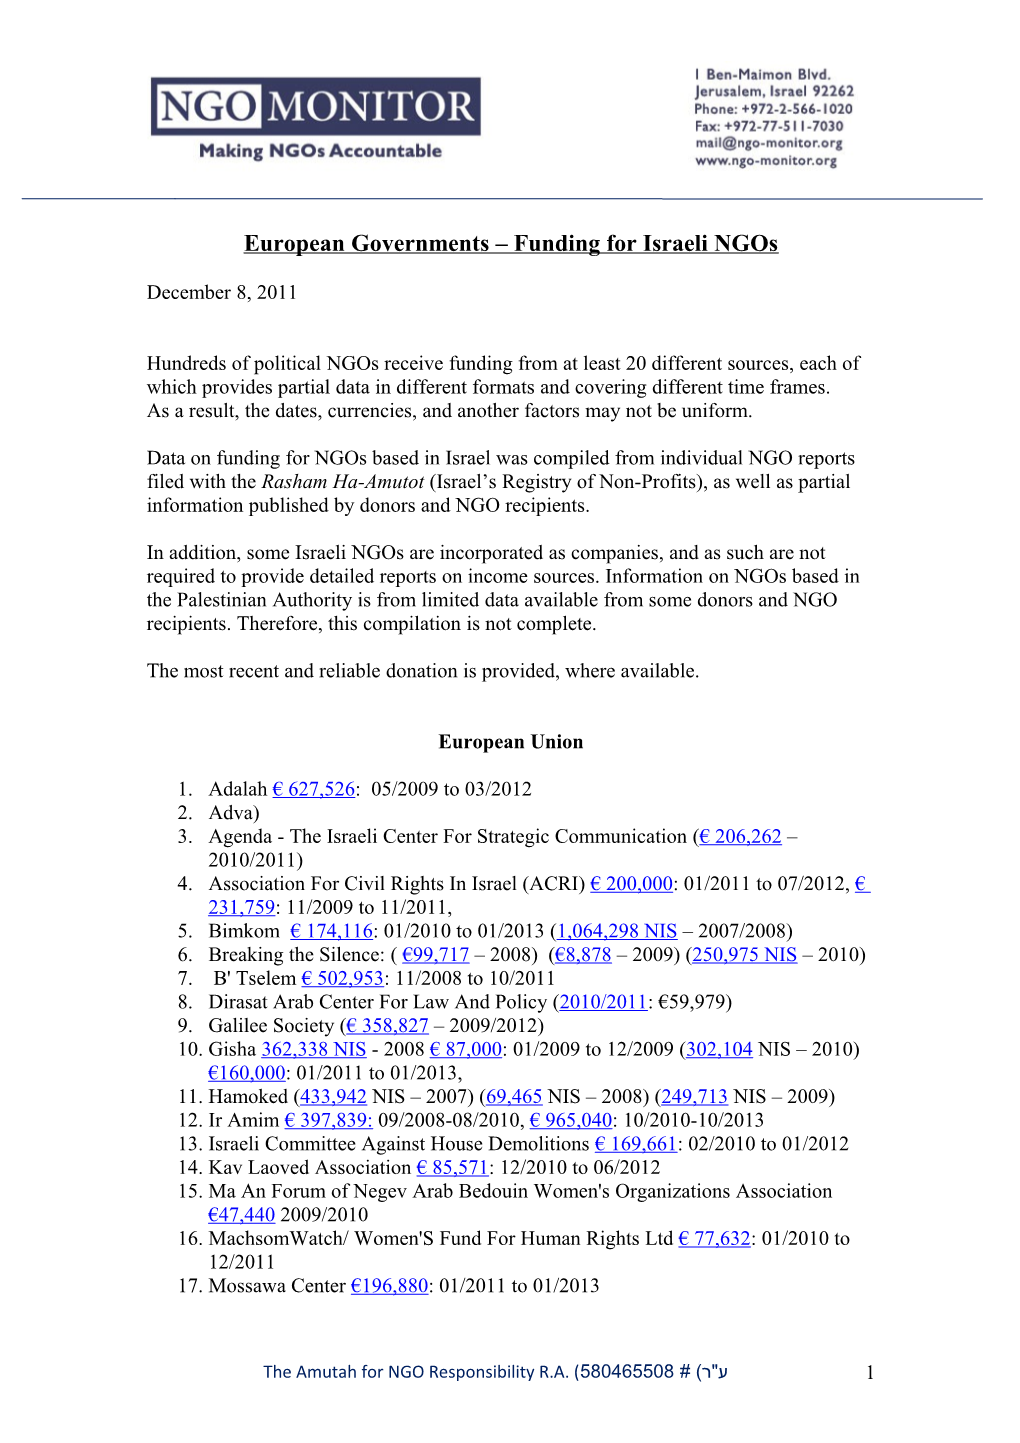 European Governments Funding for Israeli Ngos